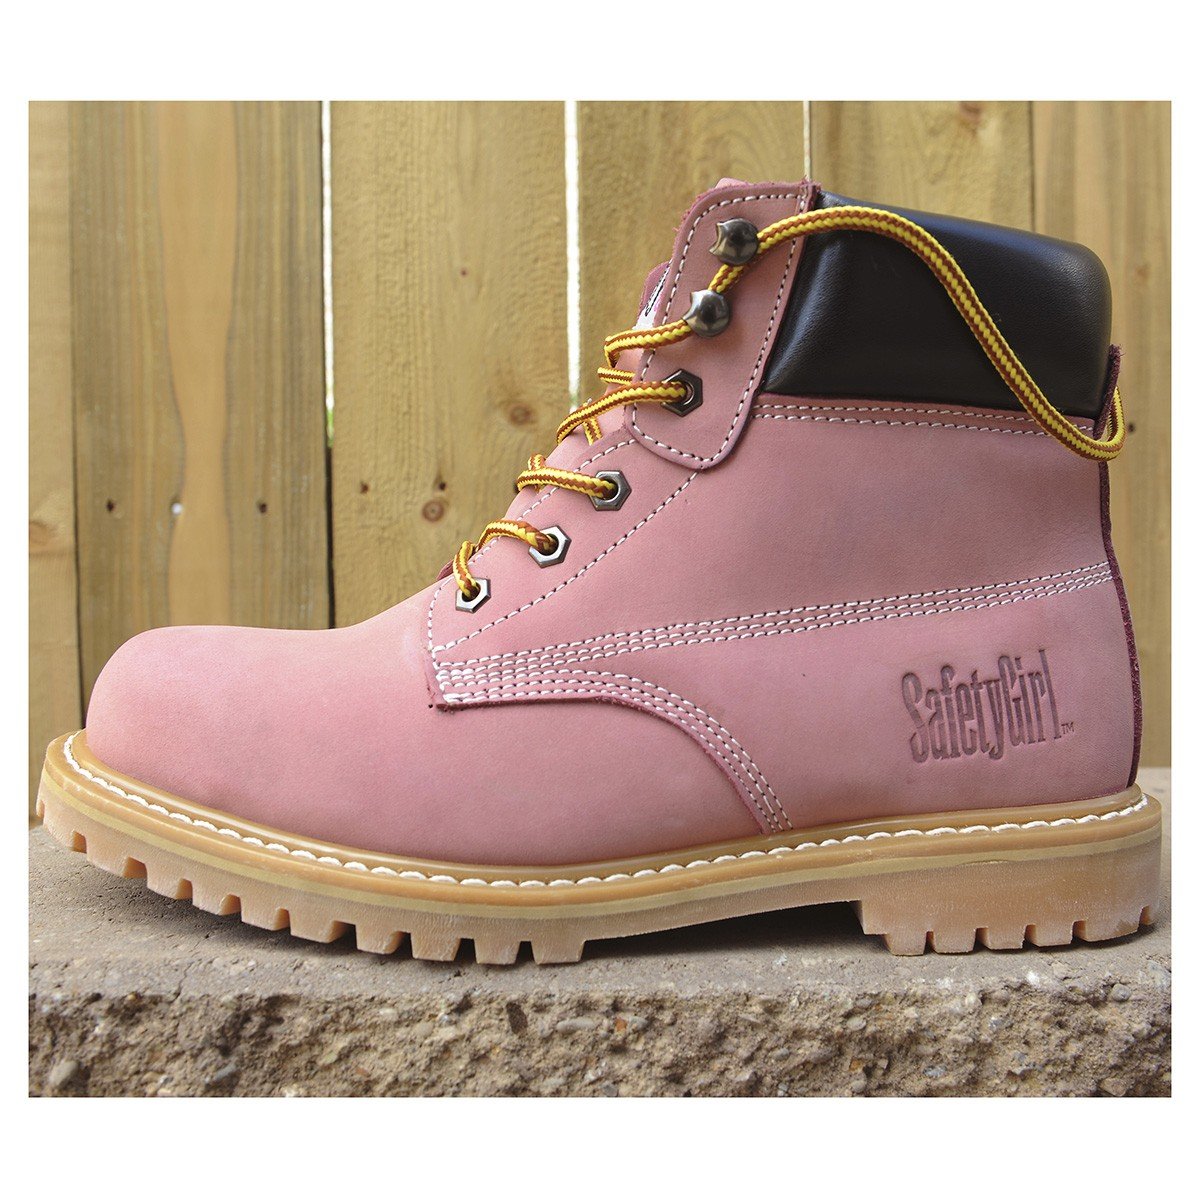 SafetyGirl Nubuck Leather Steel Toe Womens Work Boot, 9.5W, Light Pink